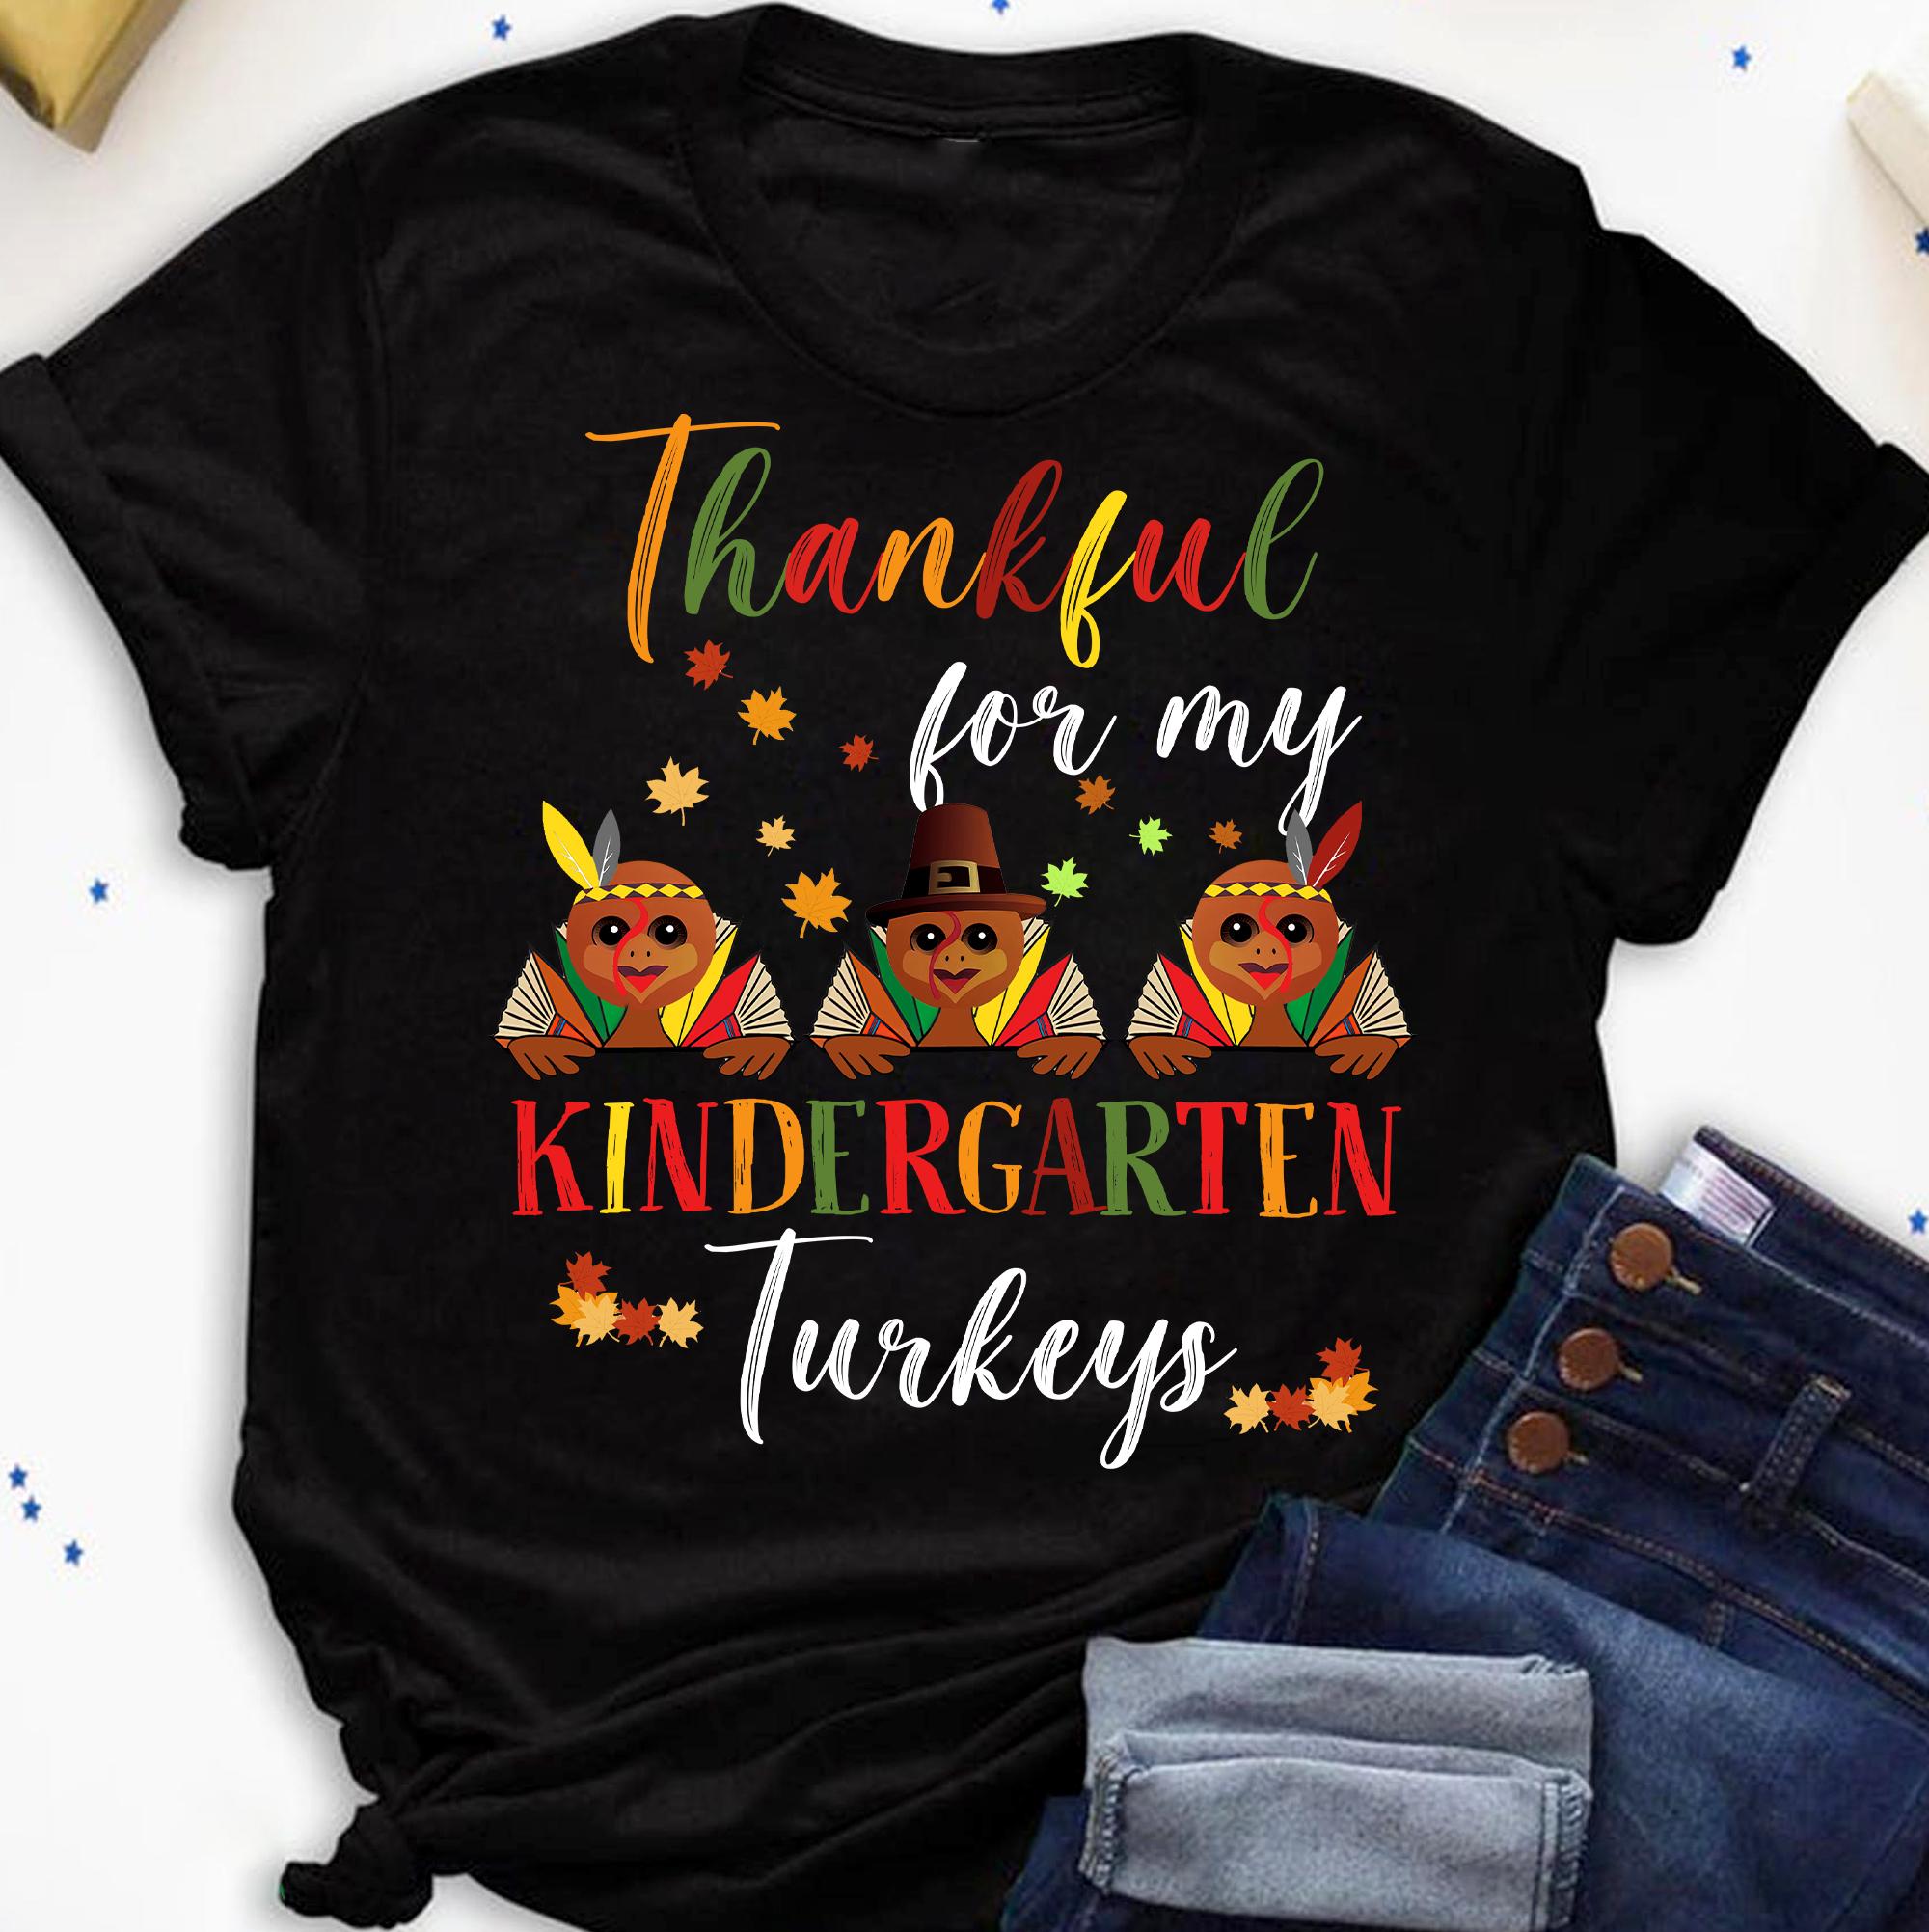 Turkeys Books, Thanksgiving Gift - Thankful for my kindergarten turkeys